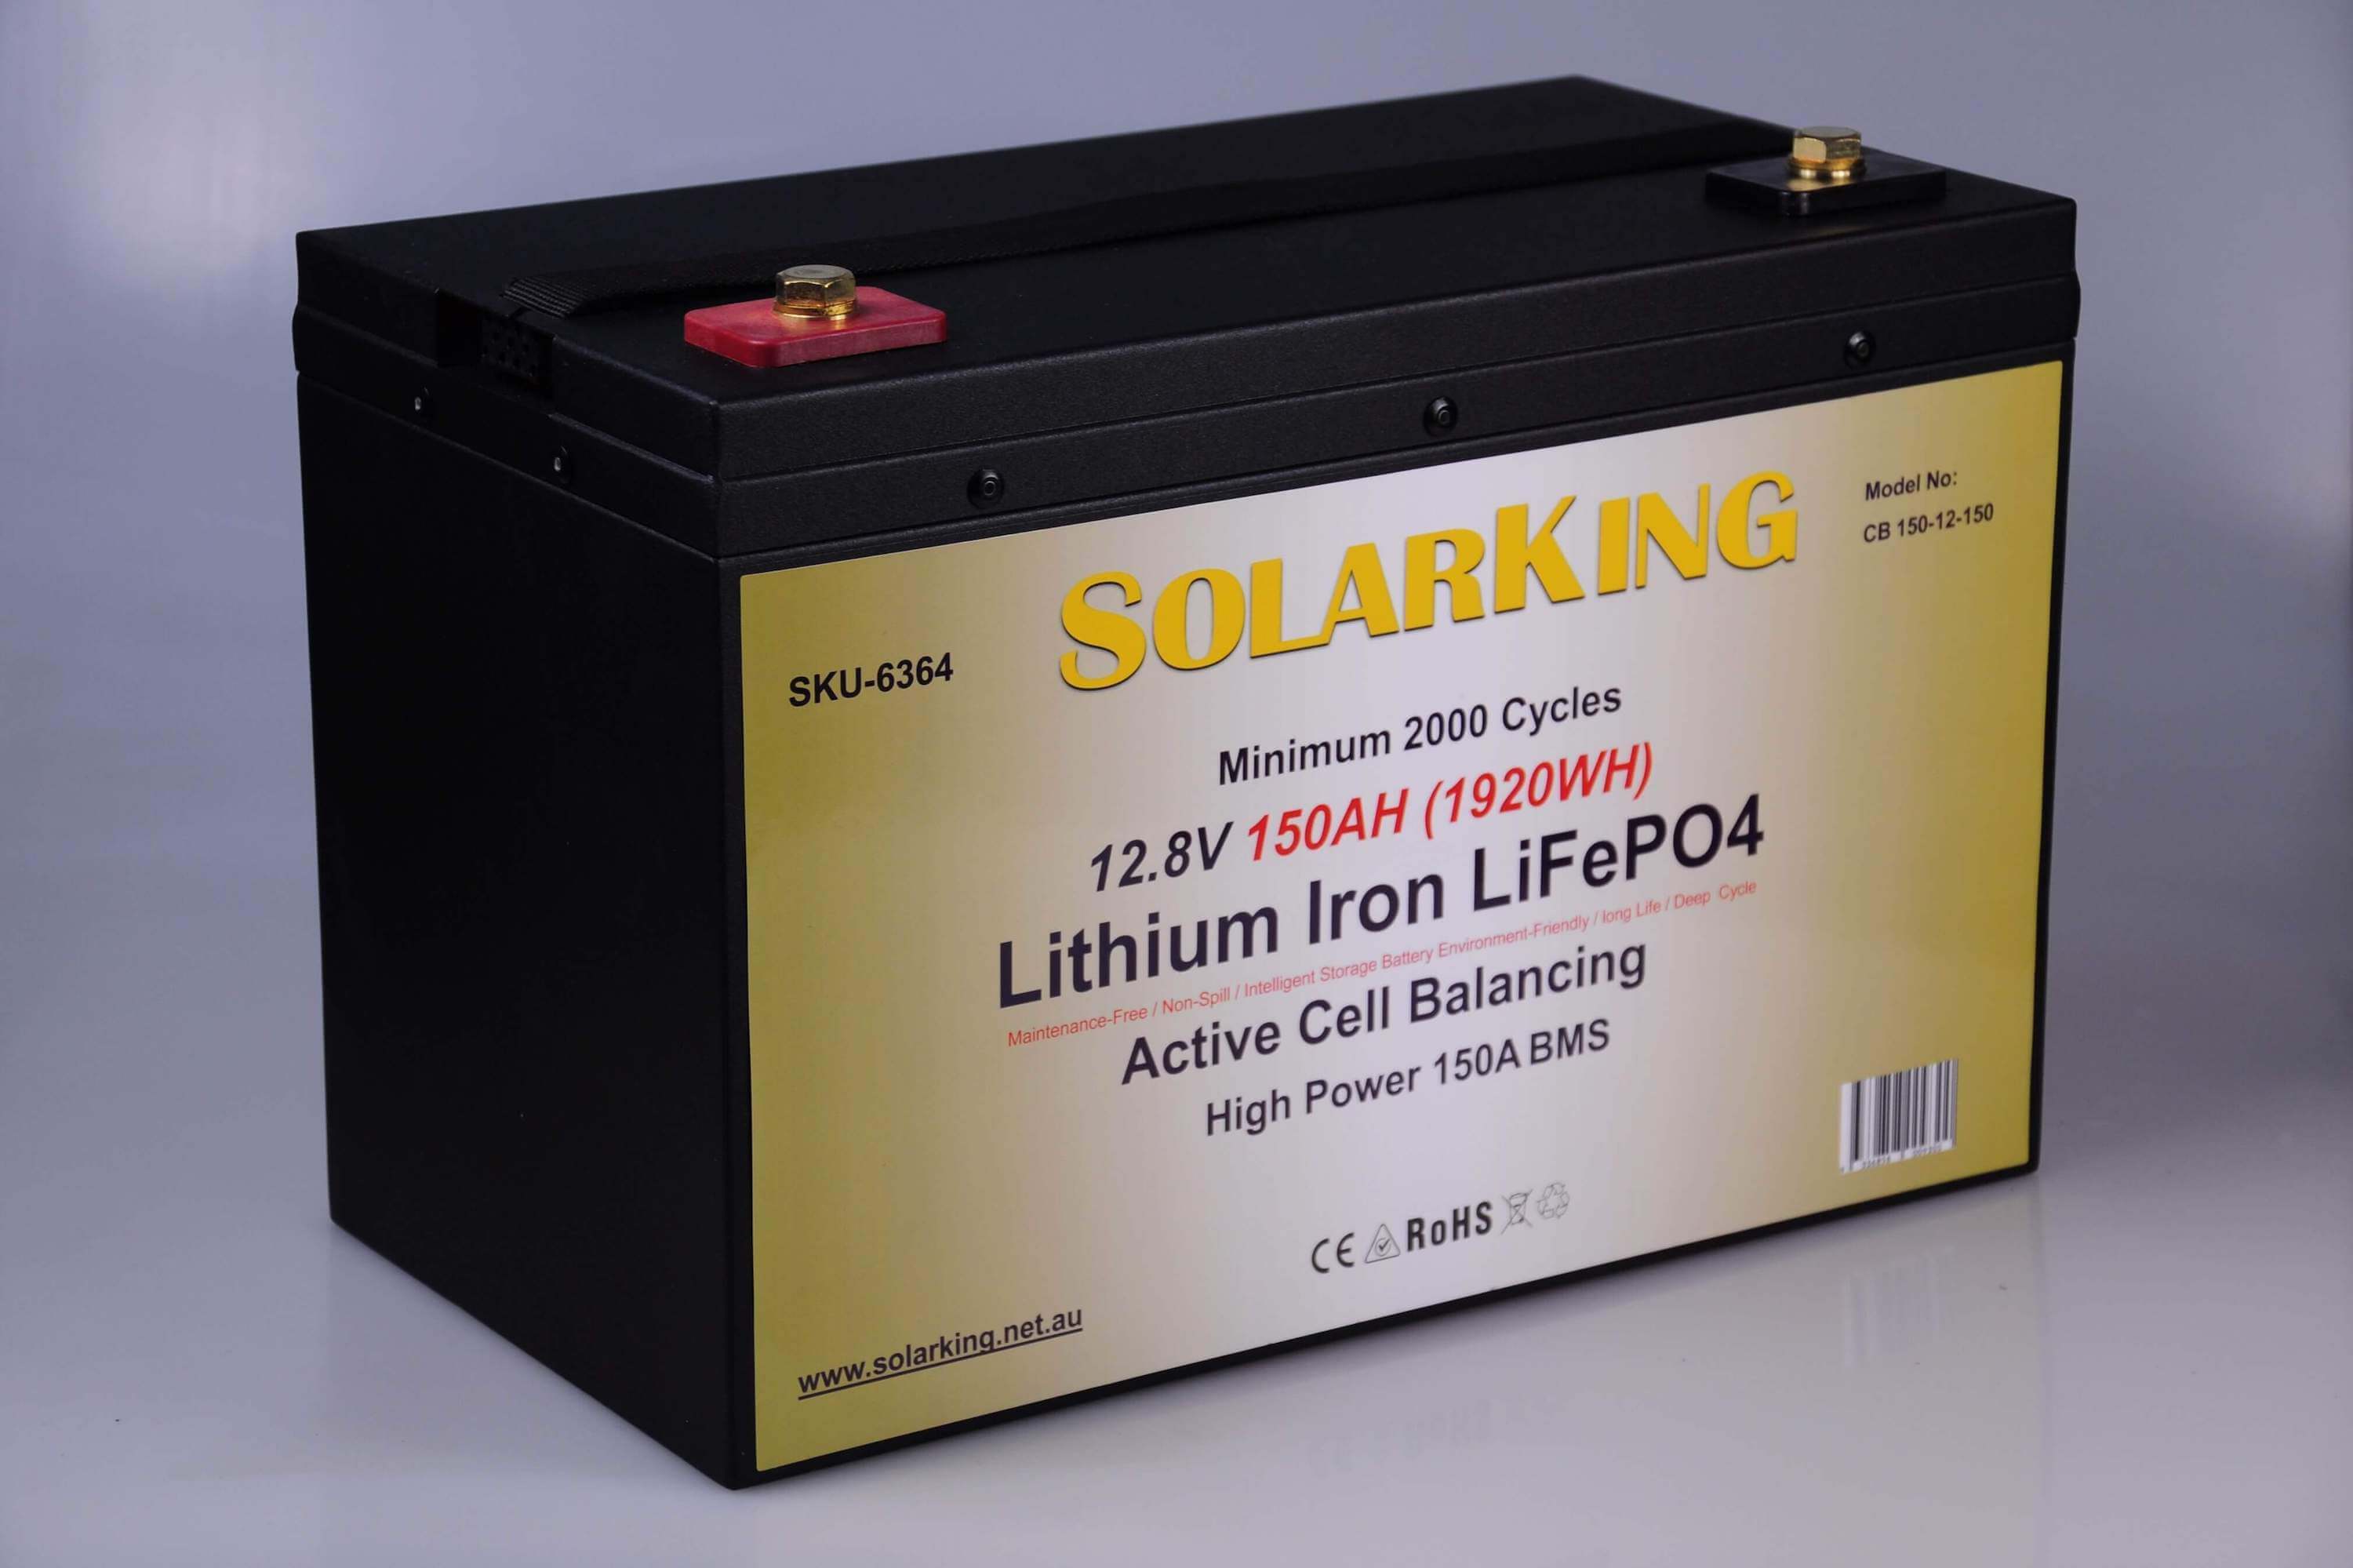 12.8V 150AH SolarKing Lithium Iron Metal Case CB-150-12-150